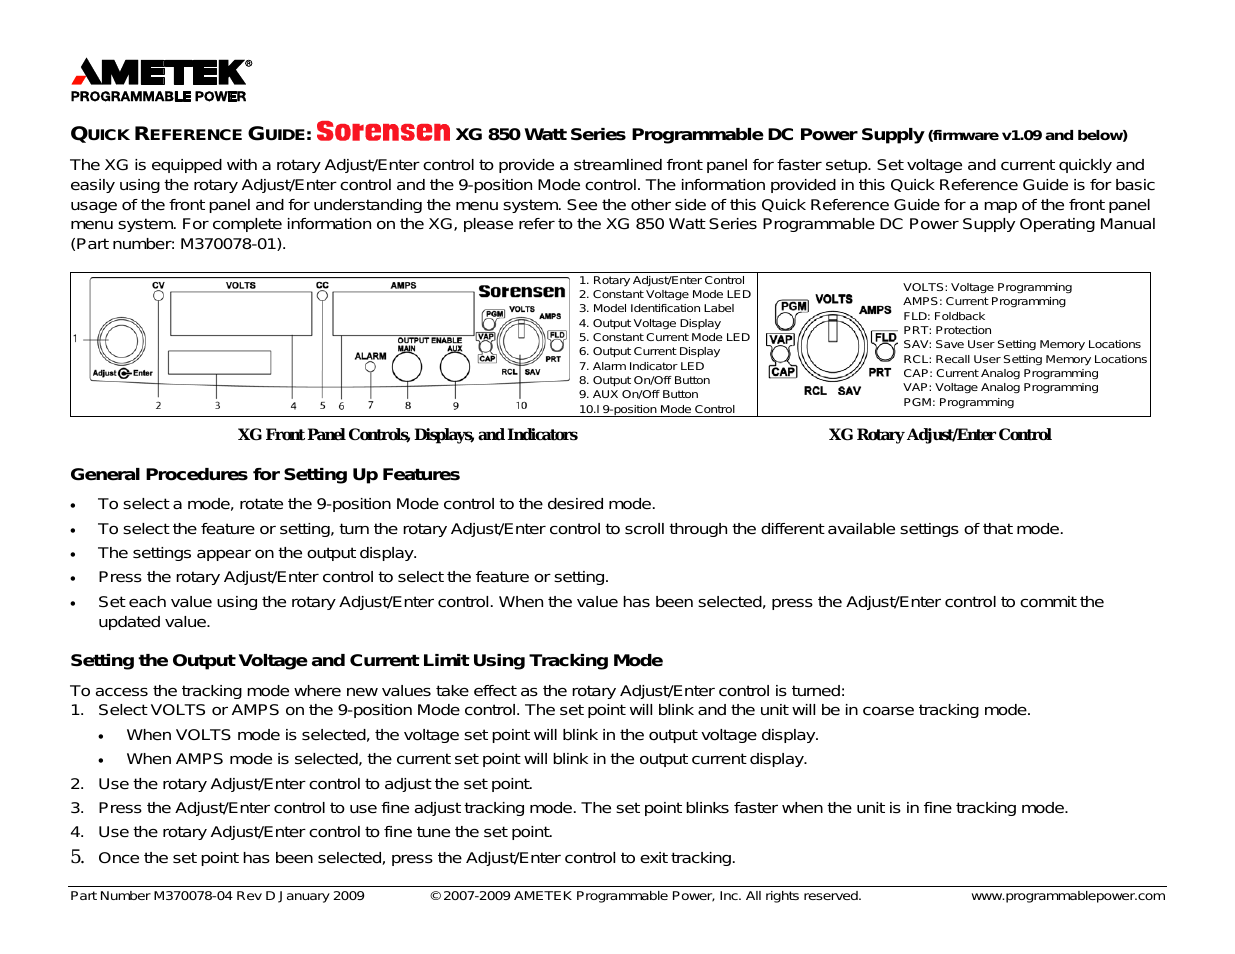 XG 850 Watt Series Quick Start version 1.11 and later1.09